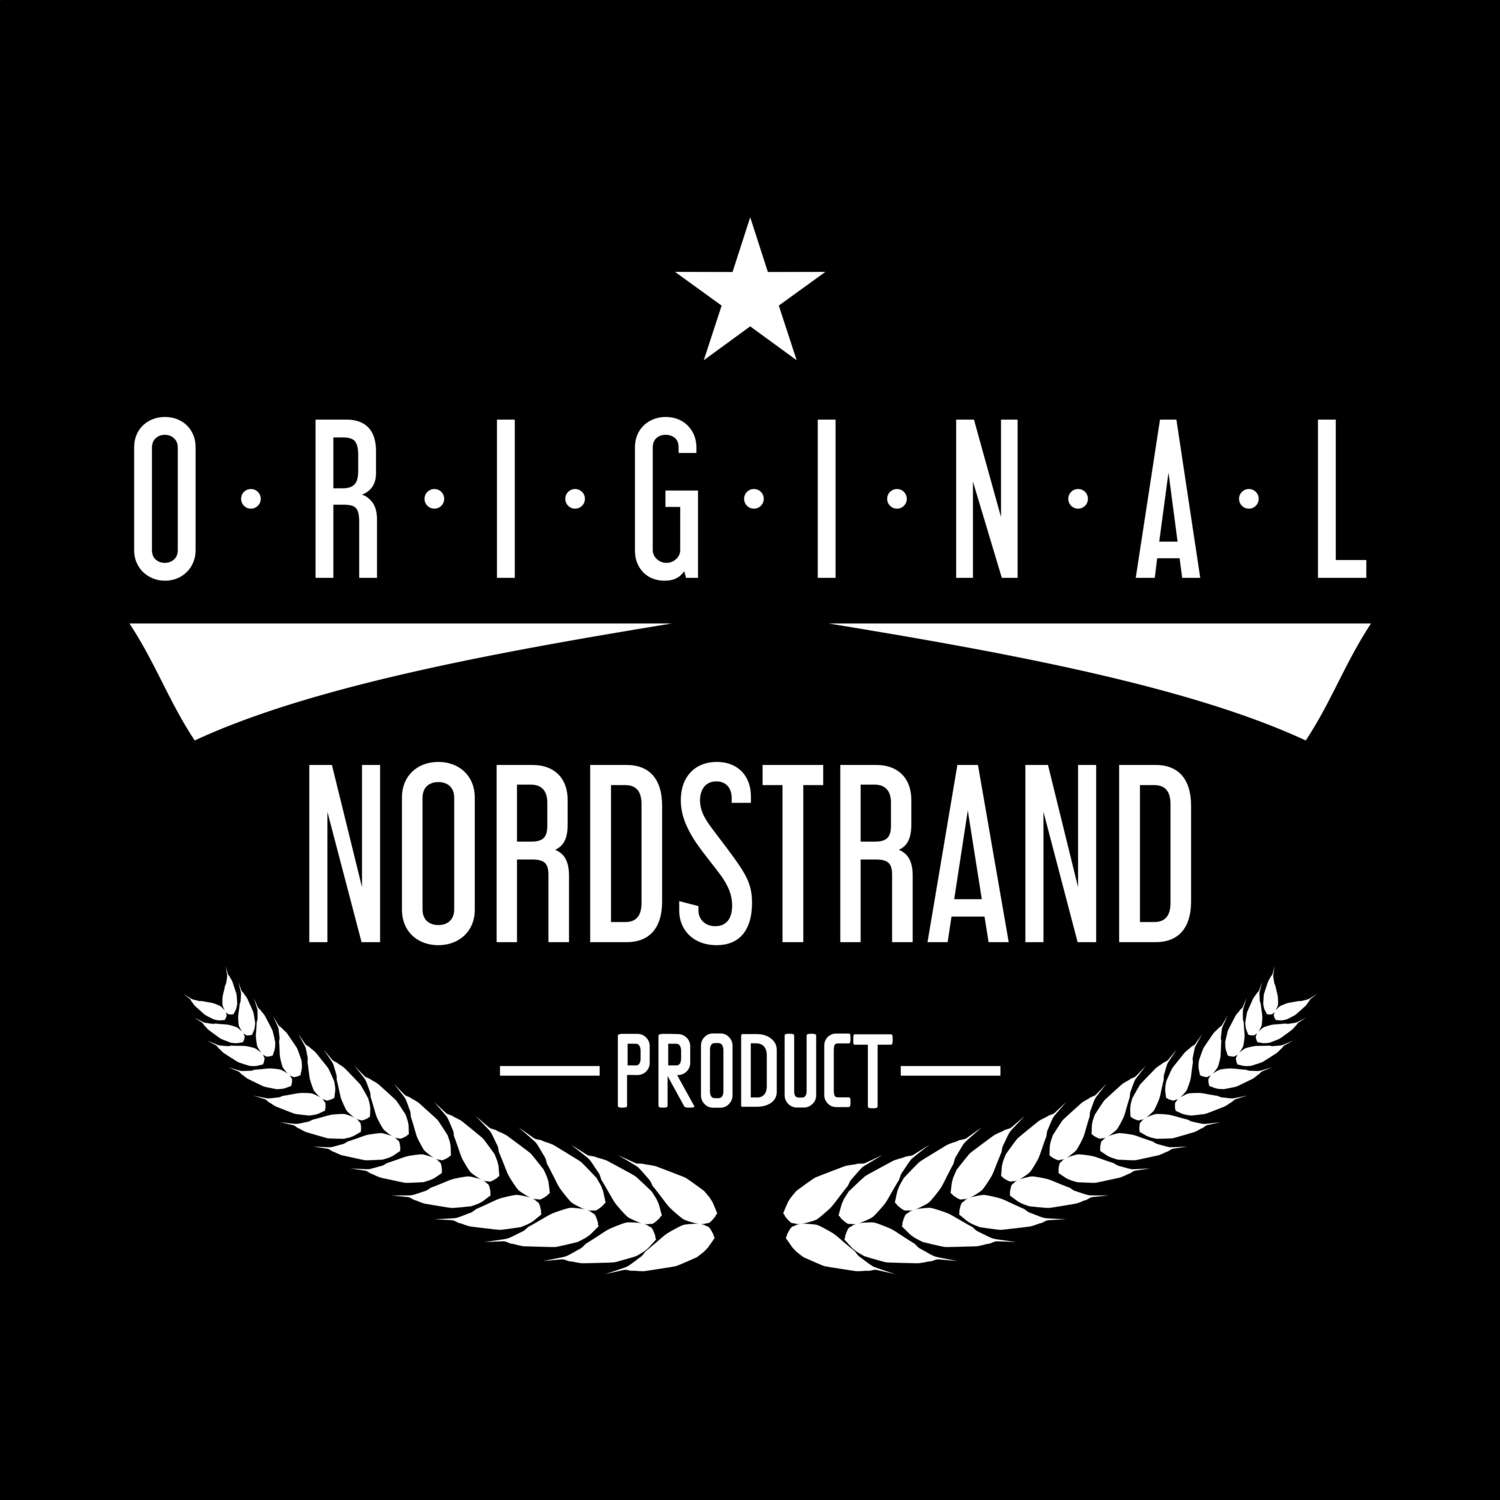 Nordstrand T-Shirt »Original Product«